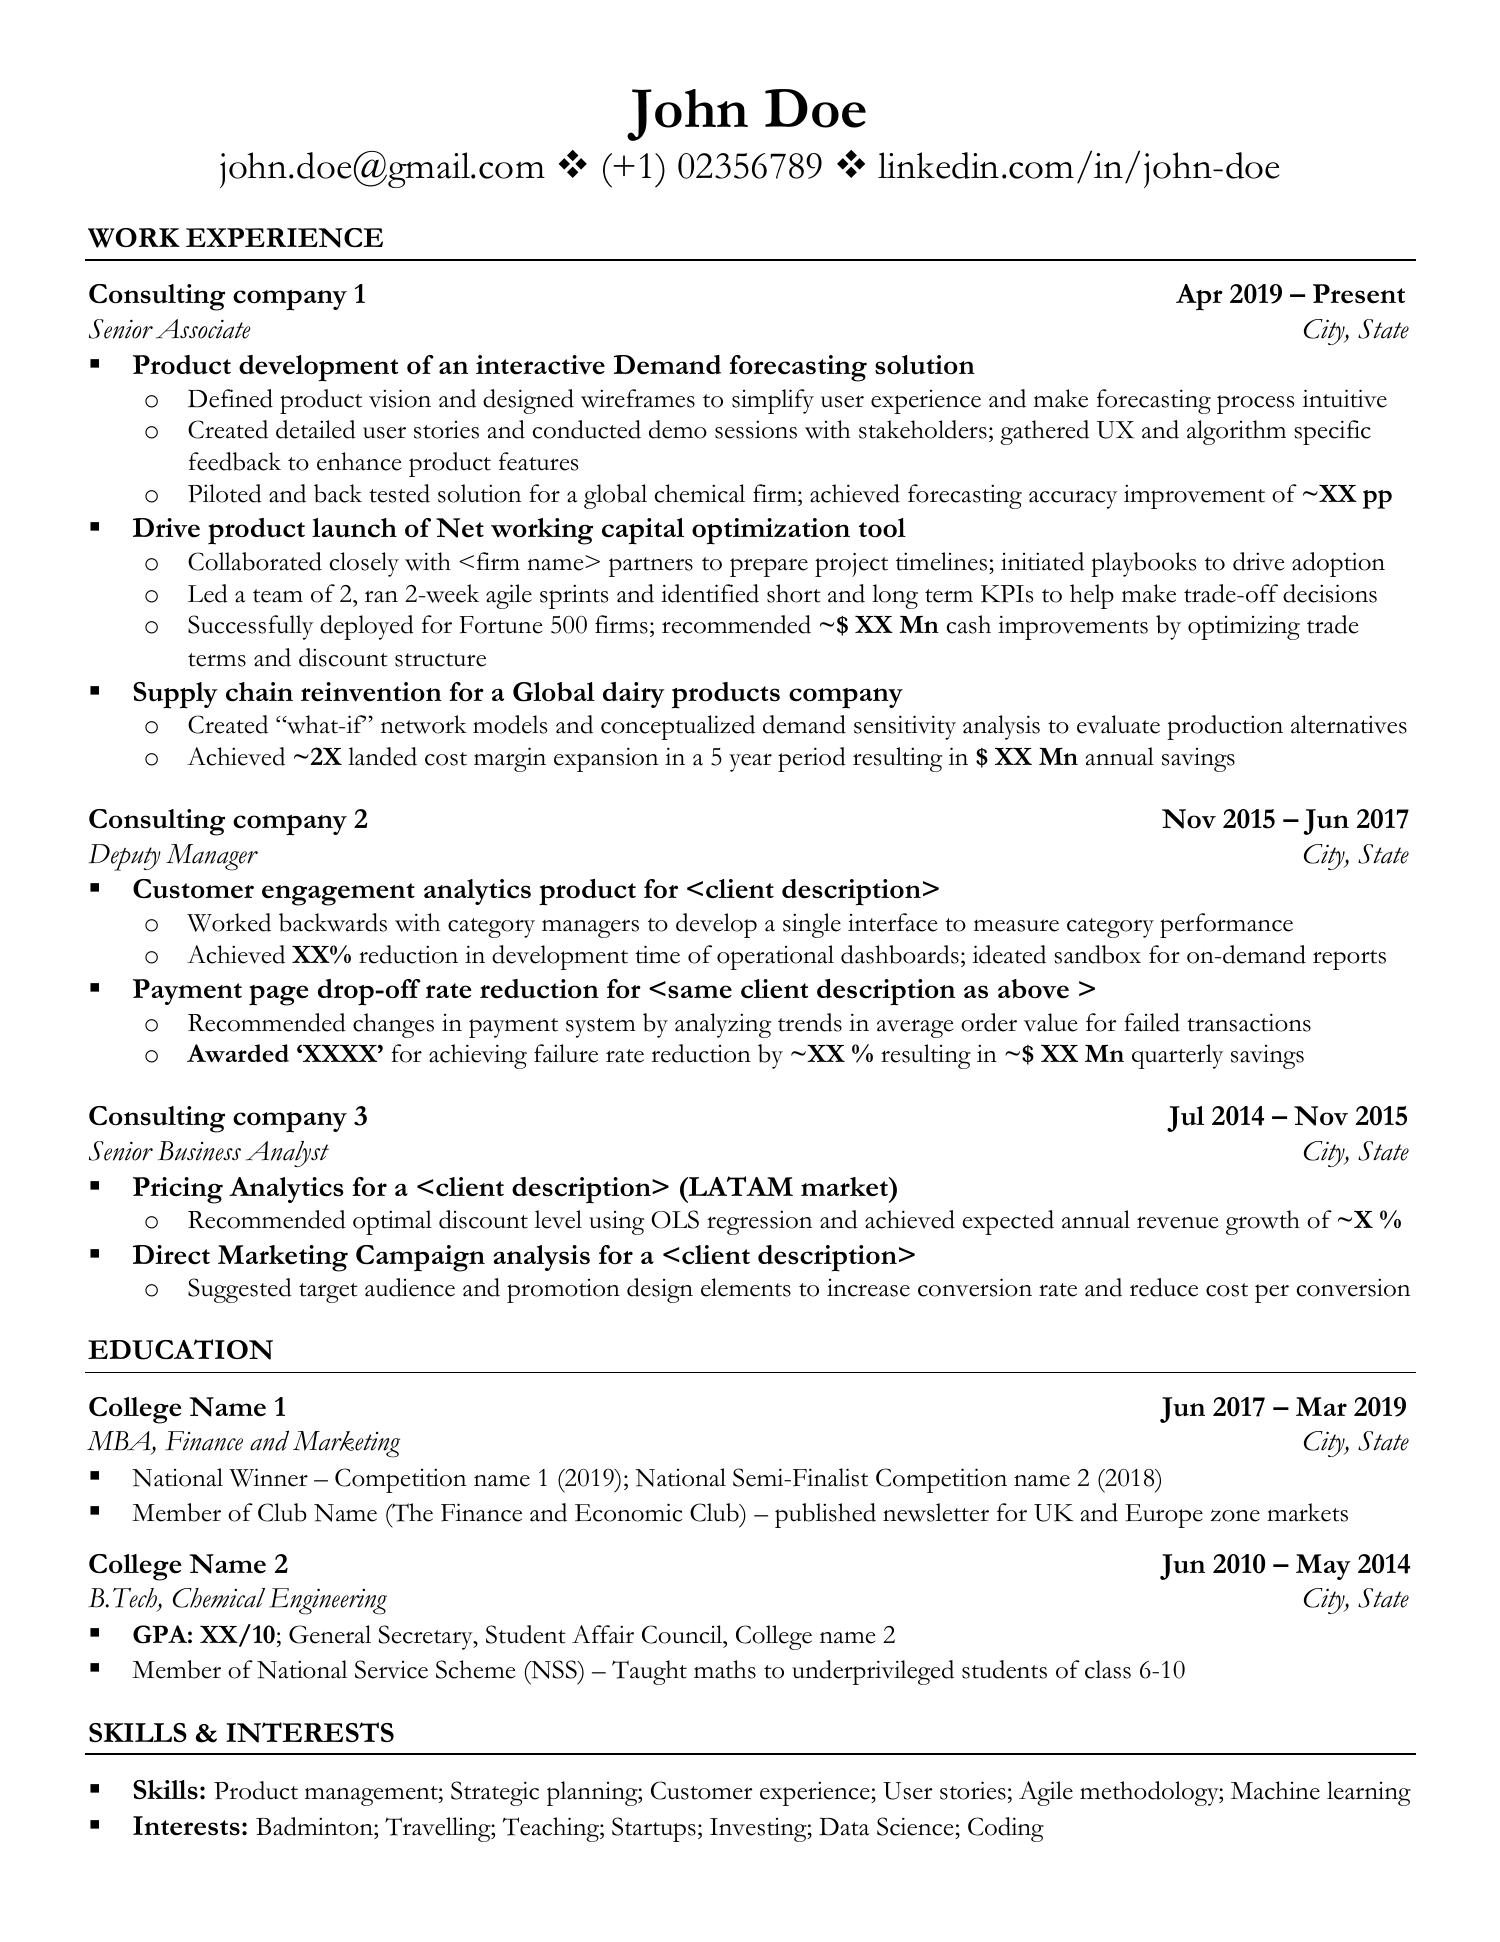 resume tips 2021 reddit